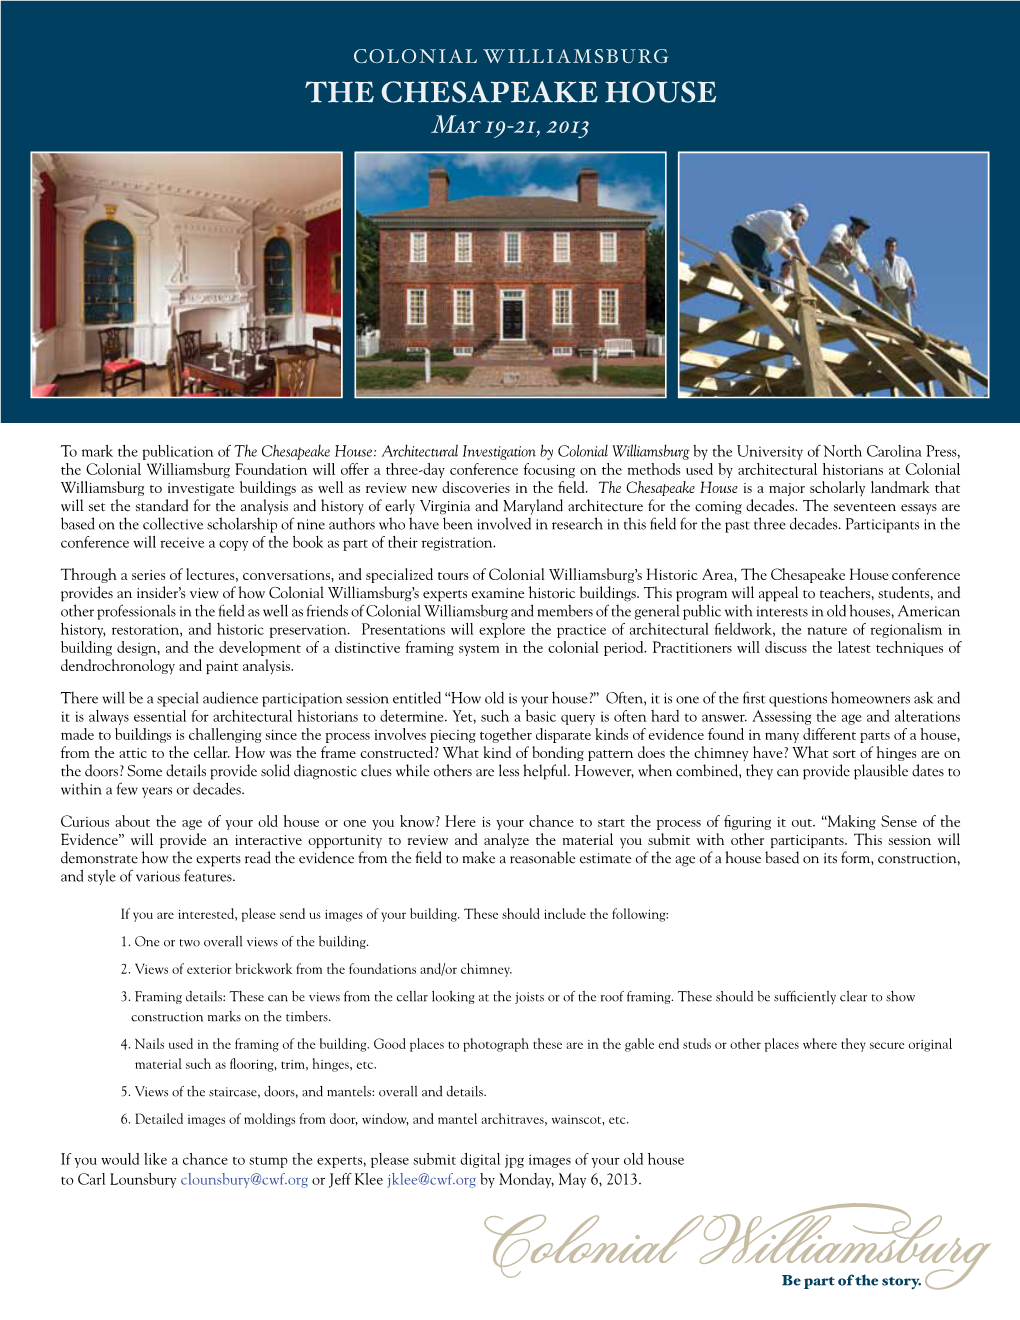 The Chesapeake House May 19-21, 2013